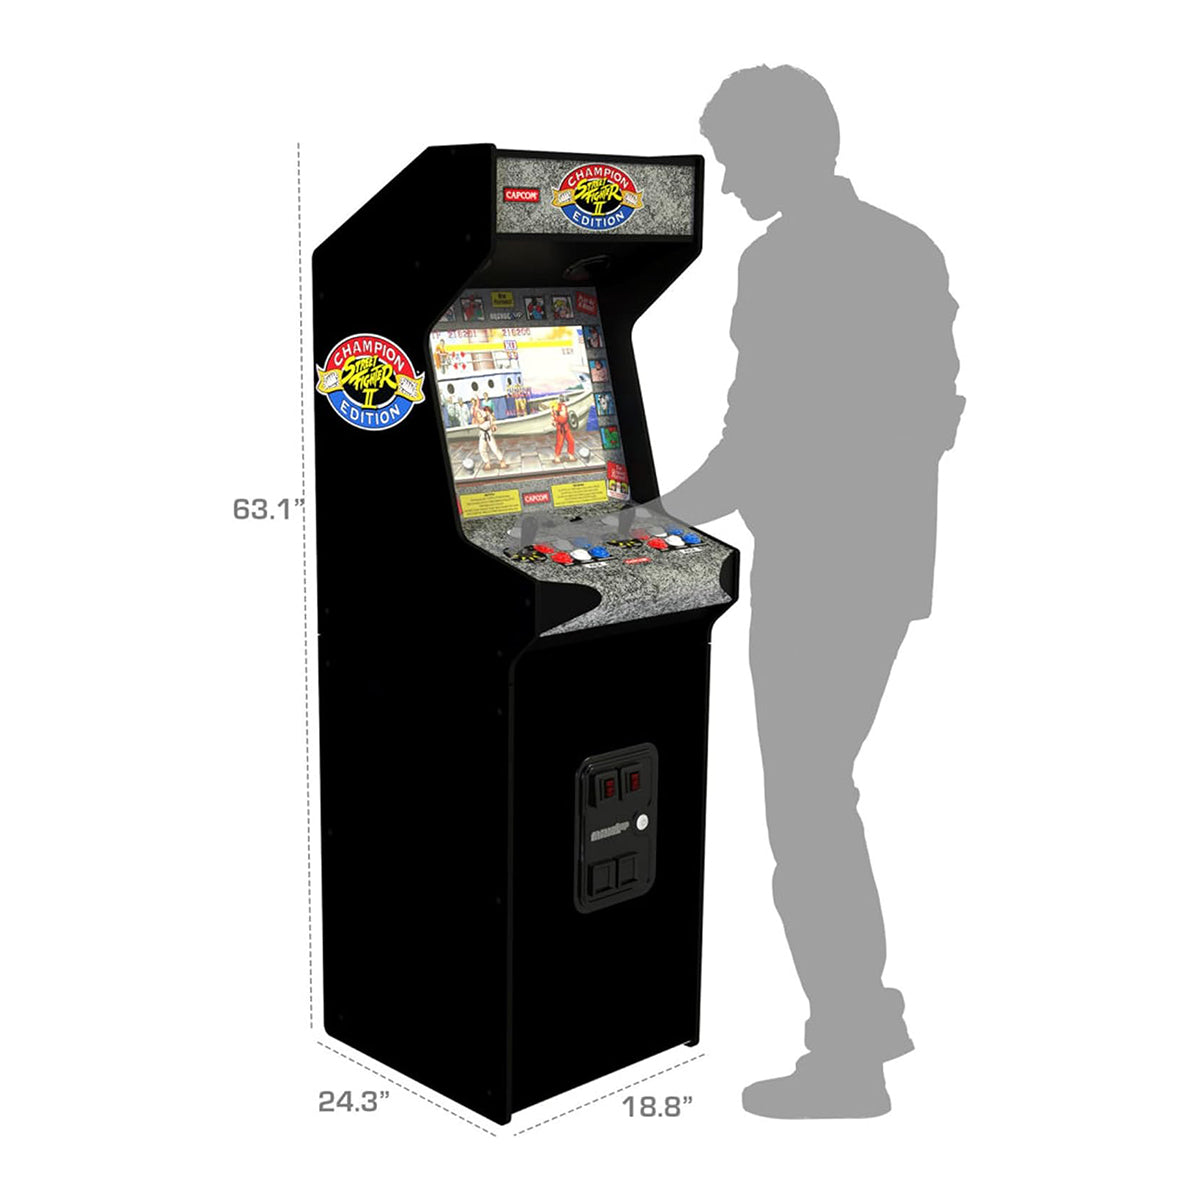 Arcade 1Up Street Fighter Deluxe Arcade Riserless